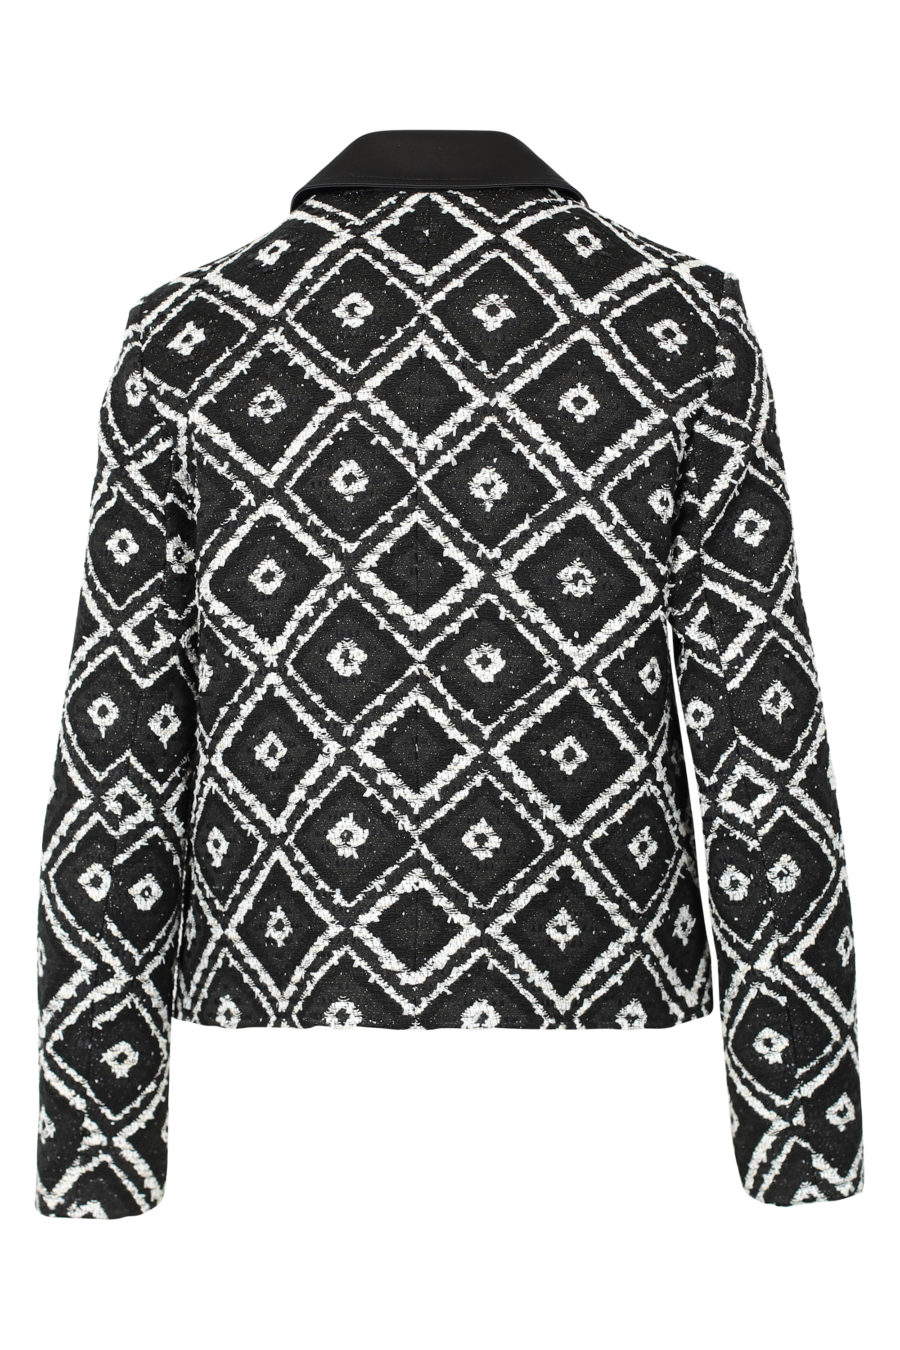 Schwarz-weiße geometrische Jacke "Boucle" - IMG 3119